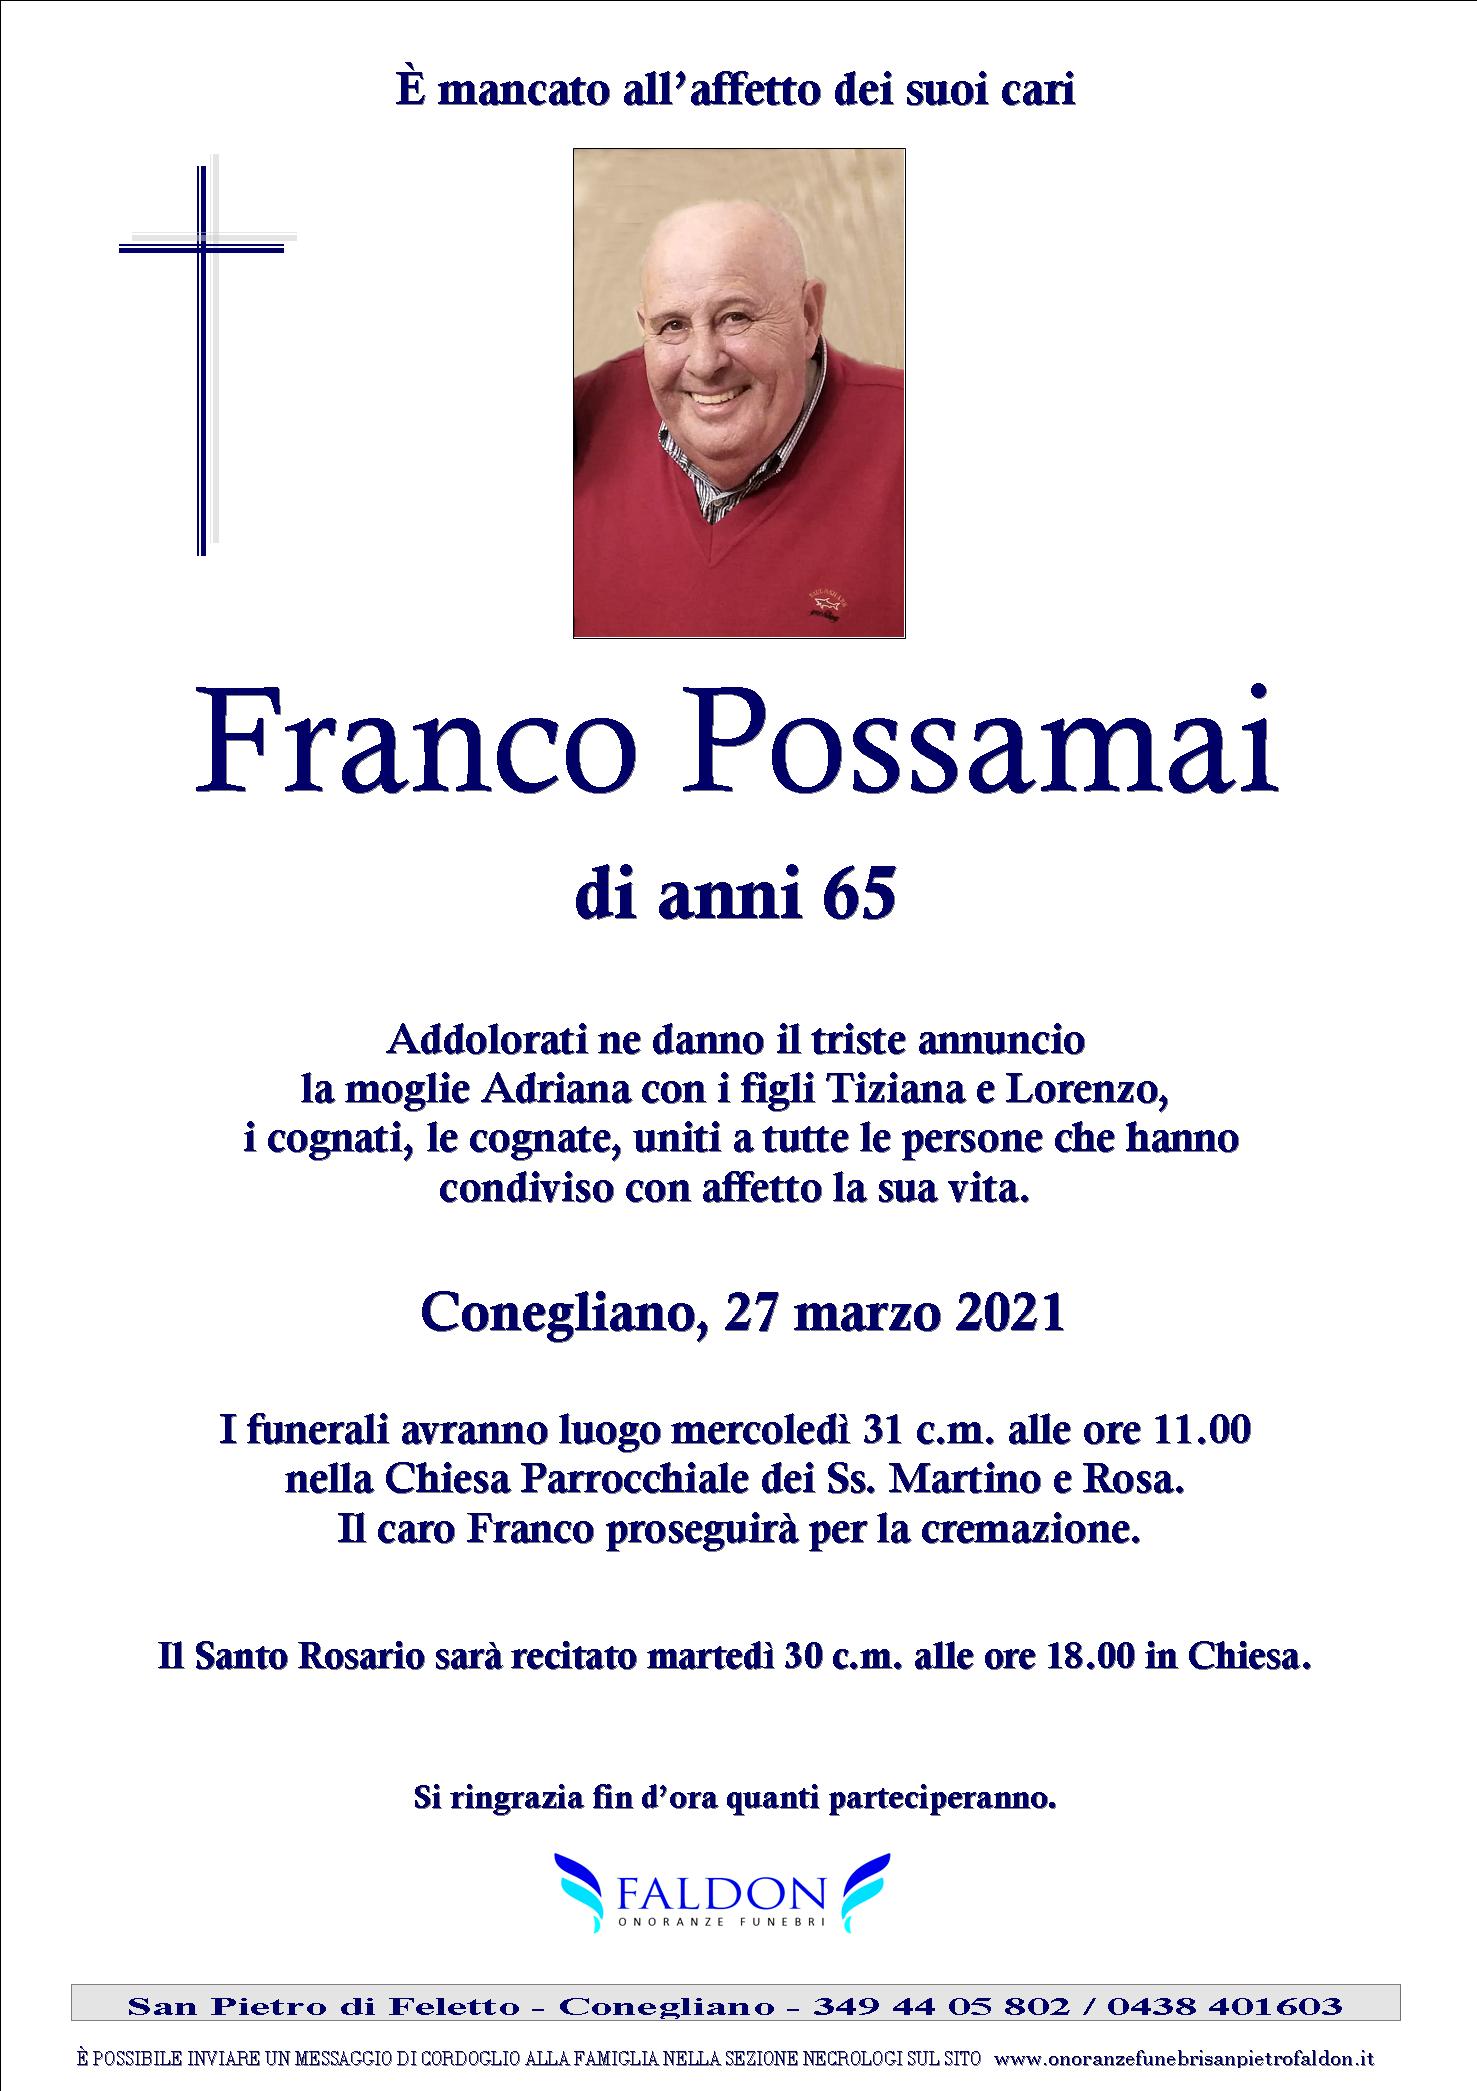 Franco Possamai